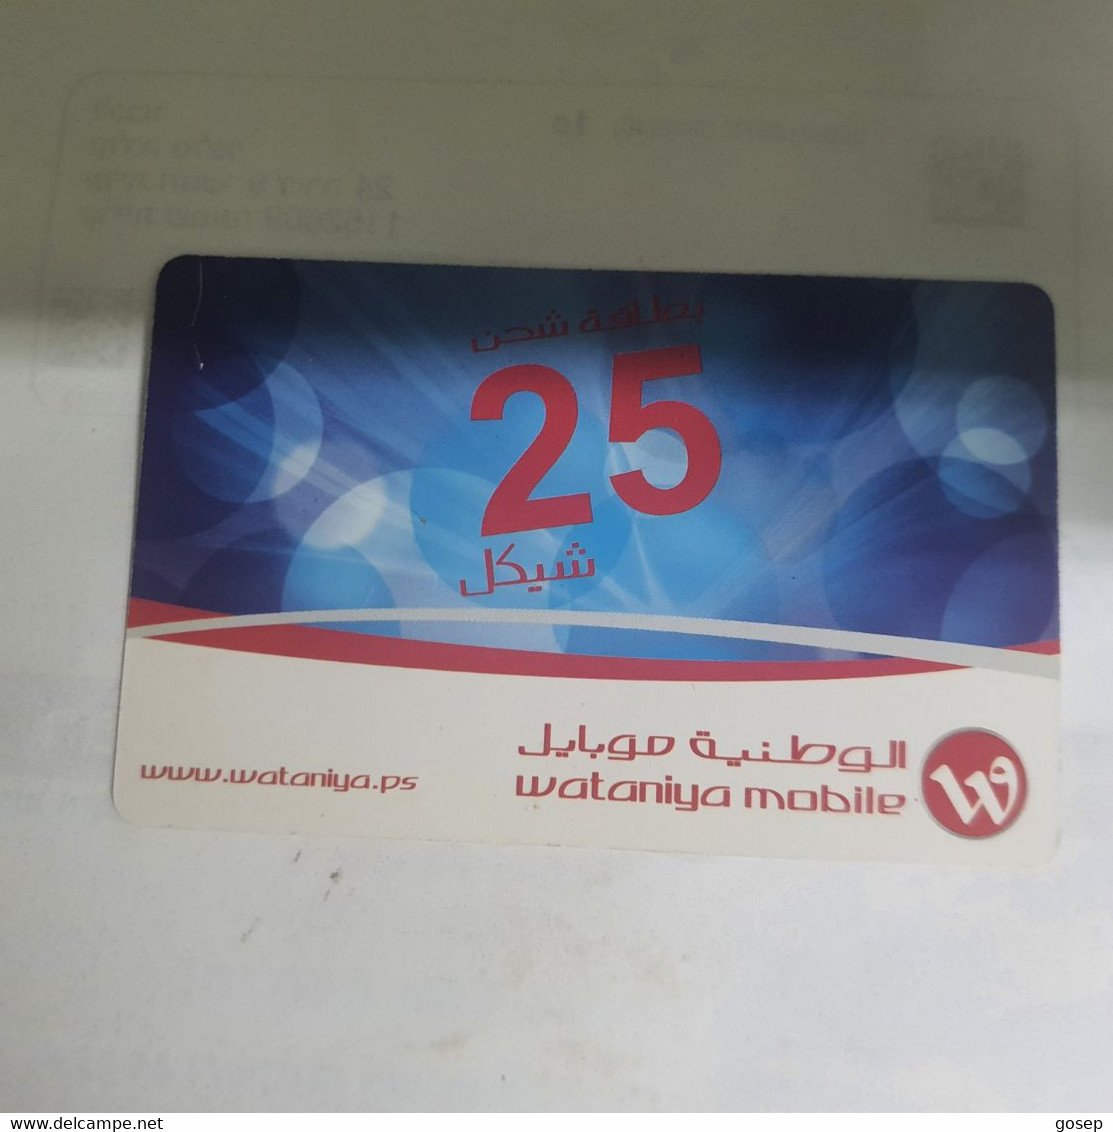 PALESTINE-(PS-WAT-REF-0002B)-Mobile 25-(371)-(1355-2370-0068-1731)-(1/4/2014)used Card+1prepiad Free - Palestina